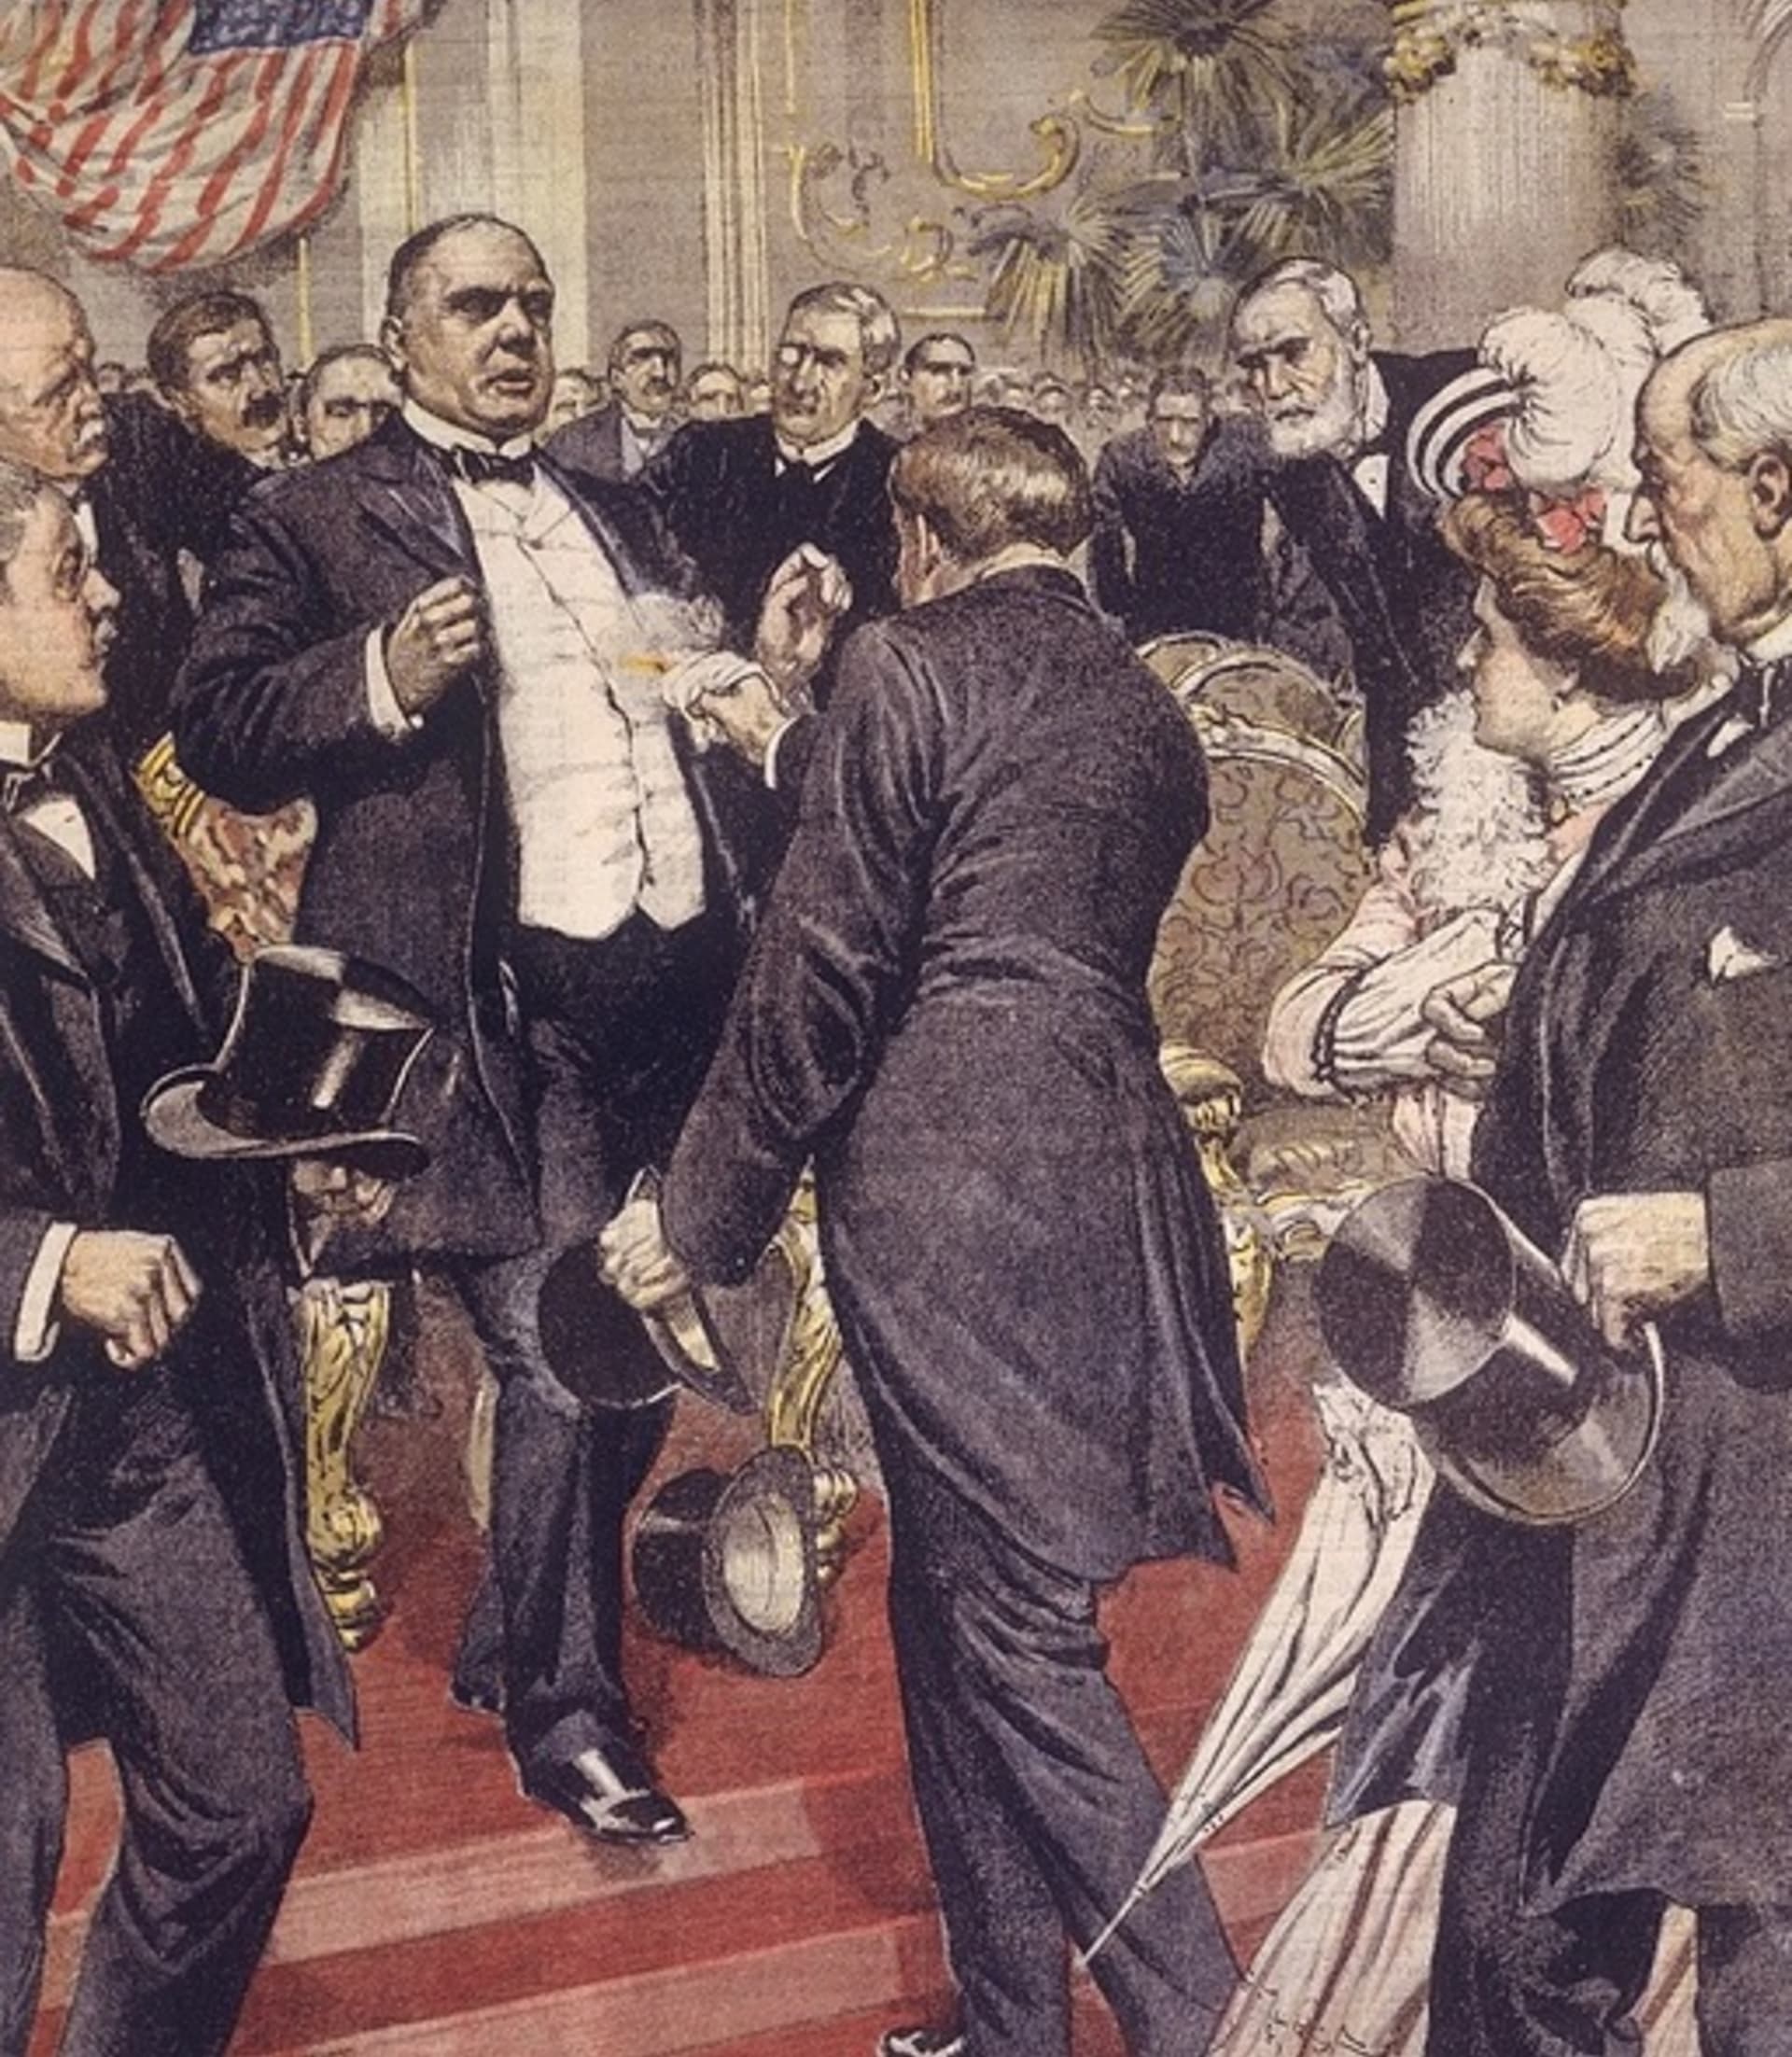 Zobrazení atentátu na prezidenta Williama McKinleyho.